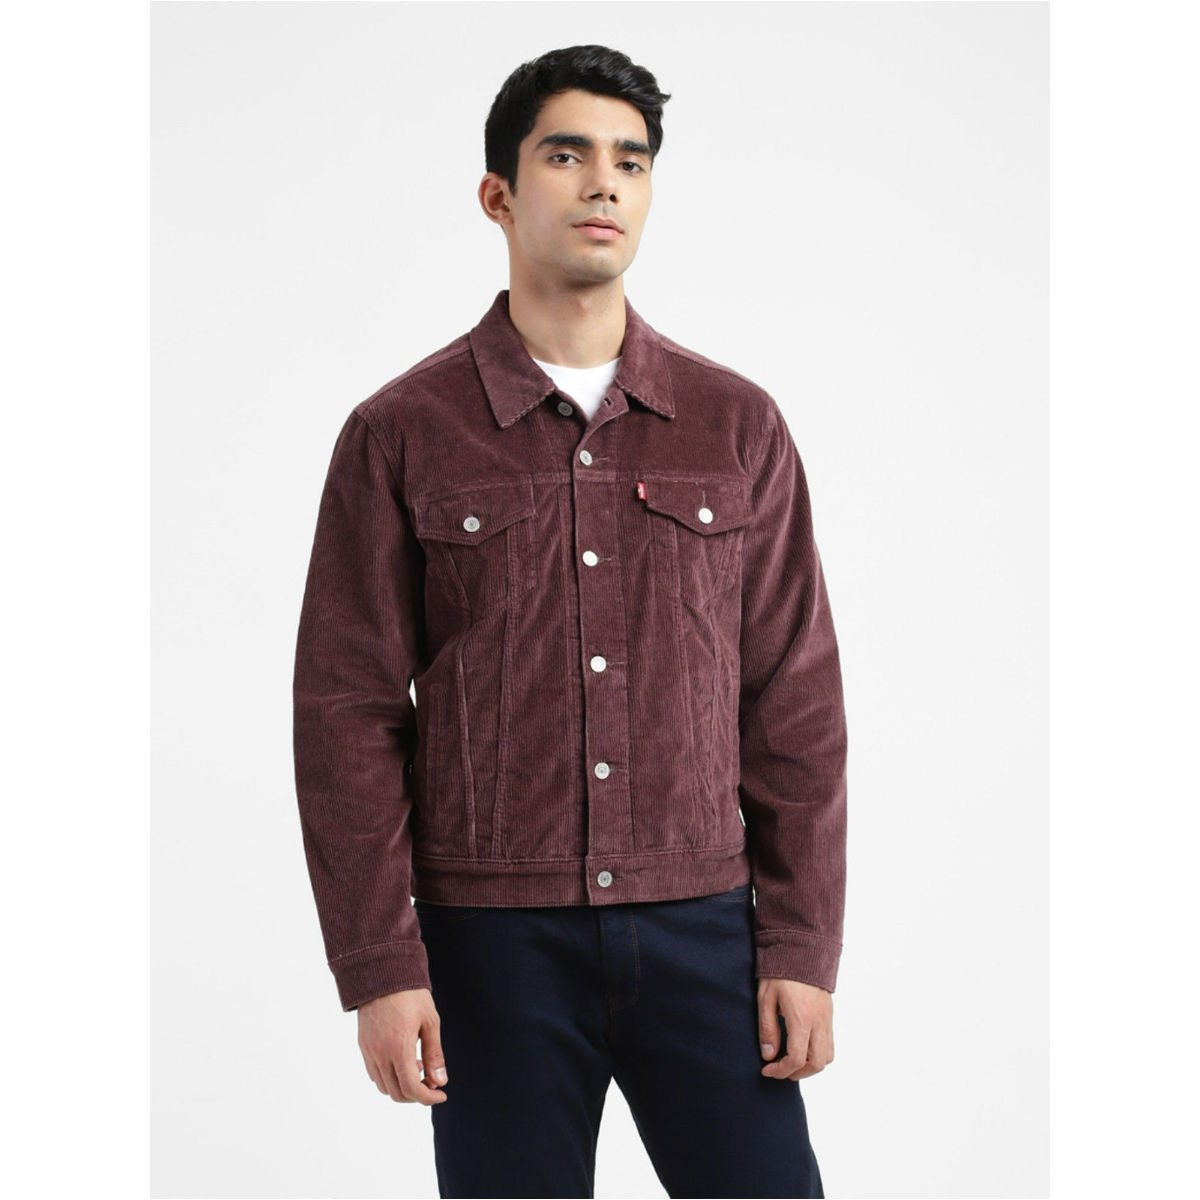 Buy Wrangler Charcoal Relaxed Fit Denim Jacket for Men's Online @ Tata CLiQ